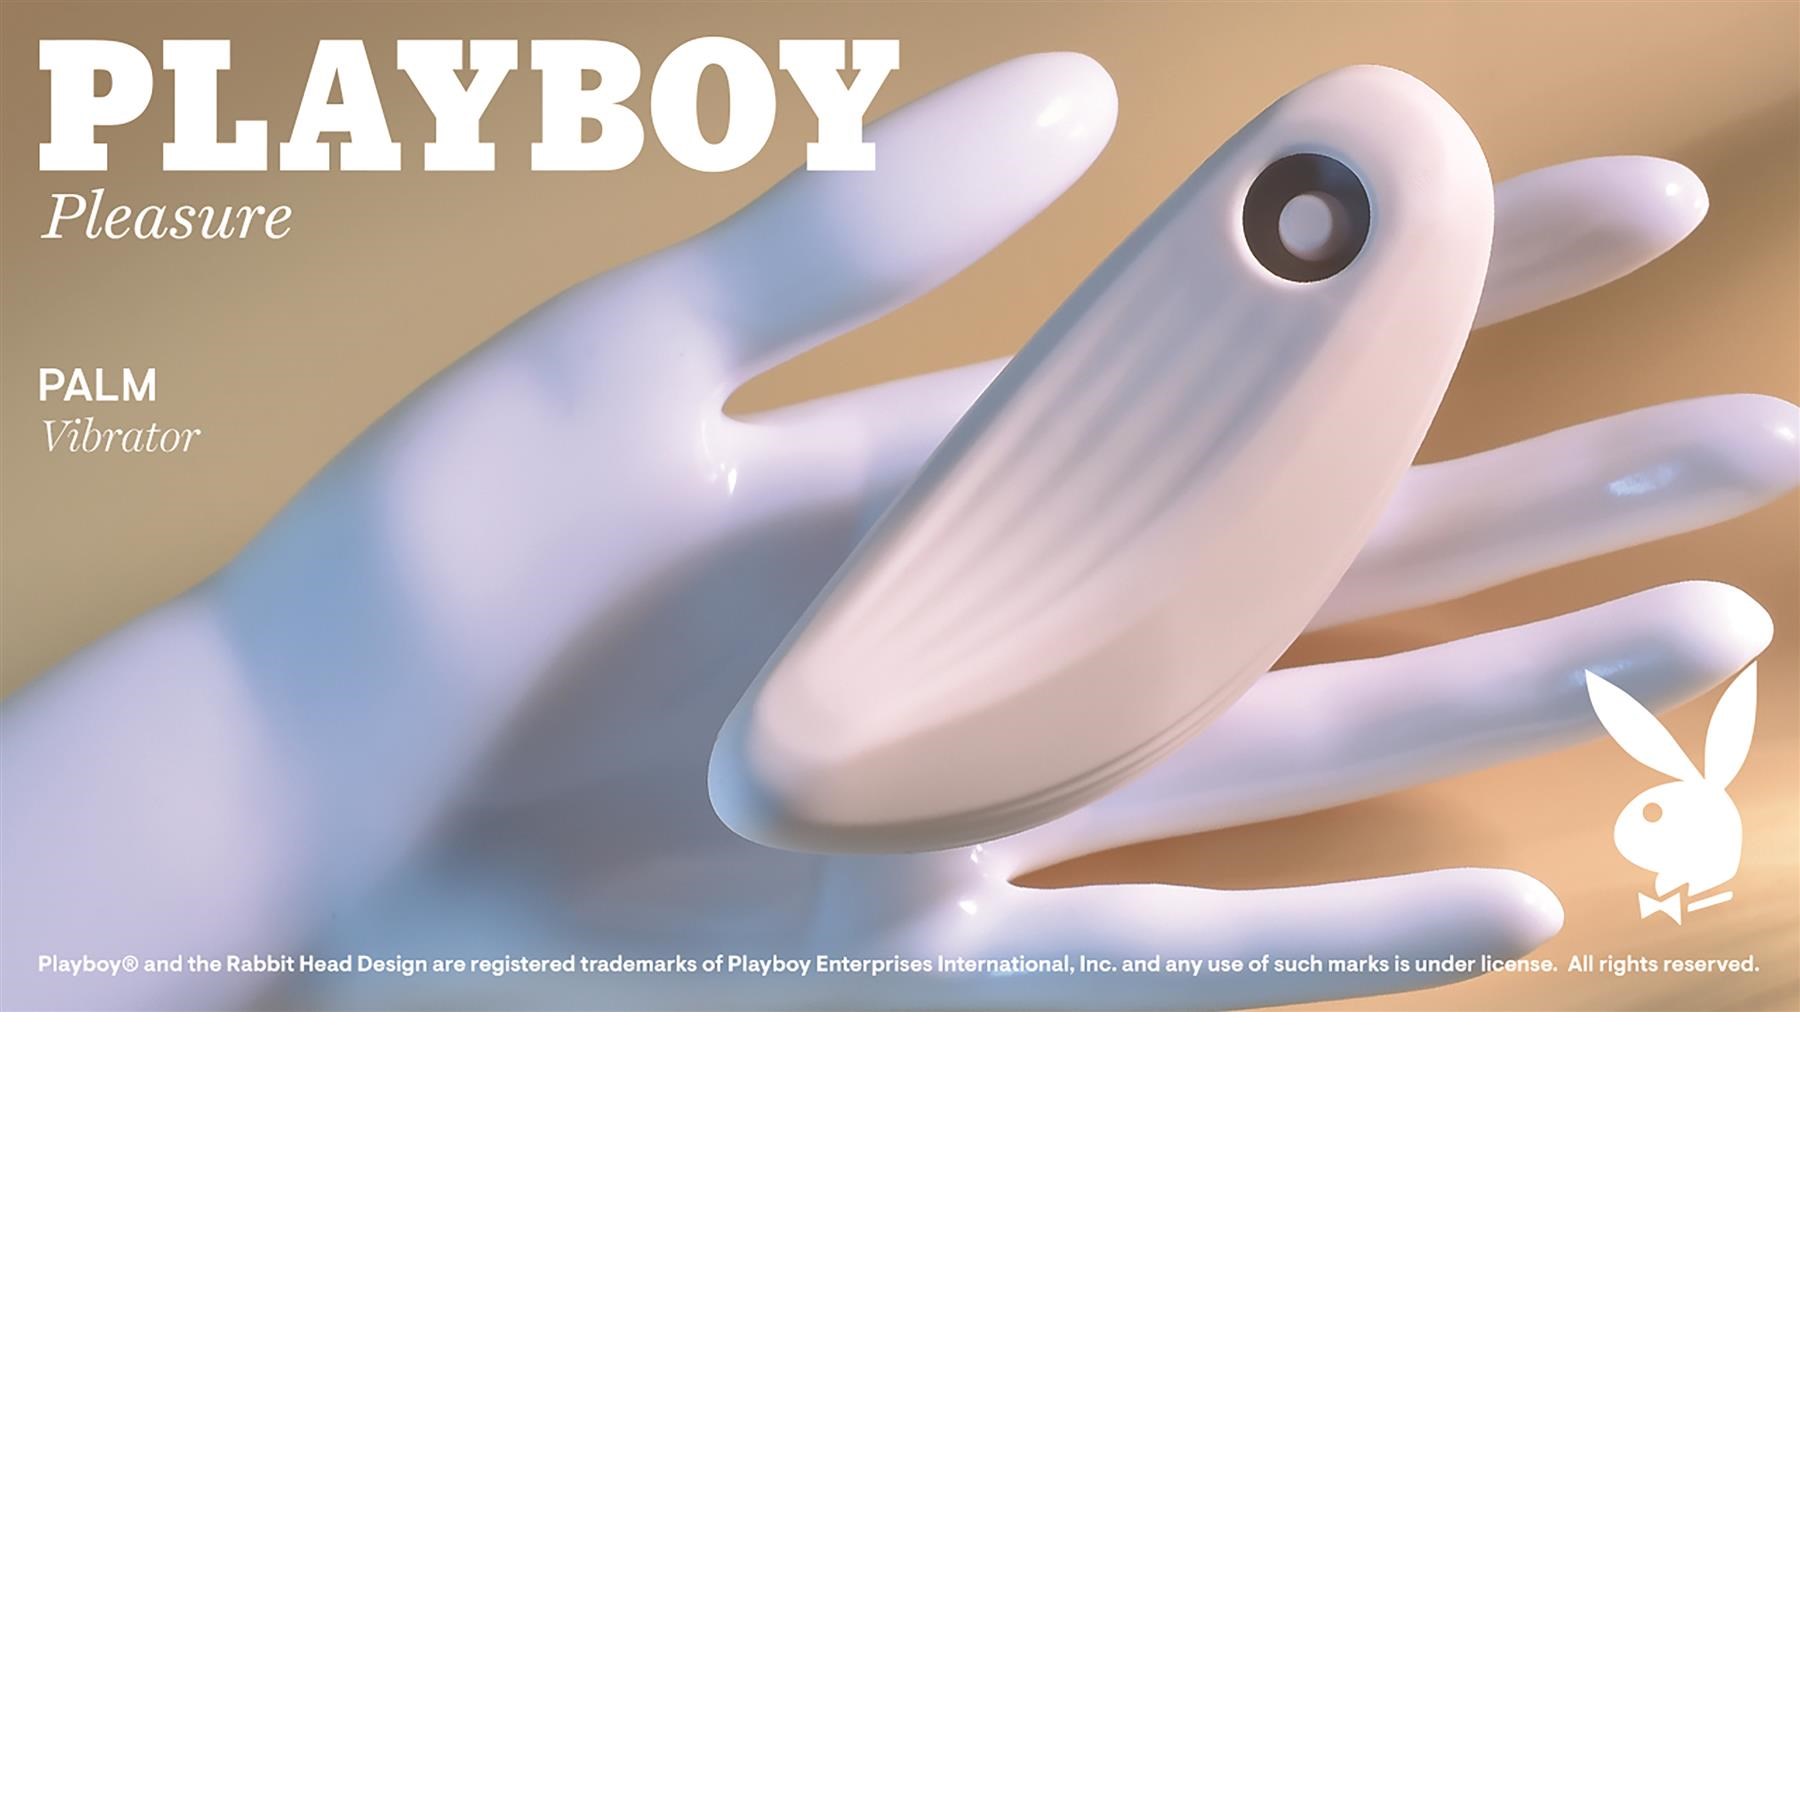 Playboy Pleasure Palm Clitoral Stimulator - Lifestyle Image